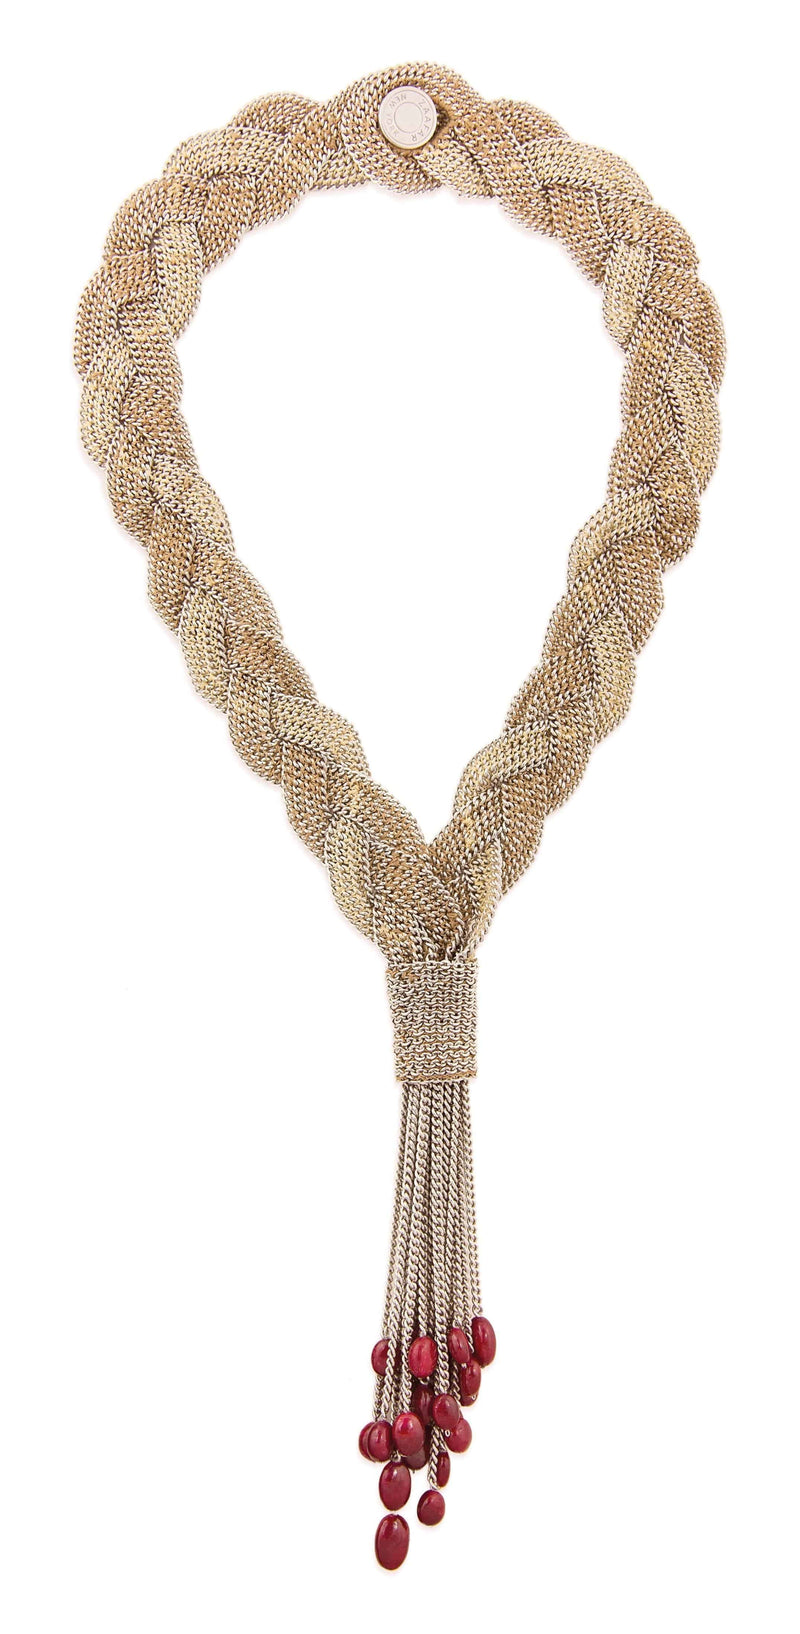 The Braid Necklace - Zaafar.com